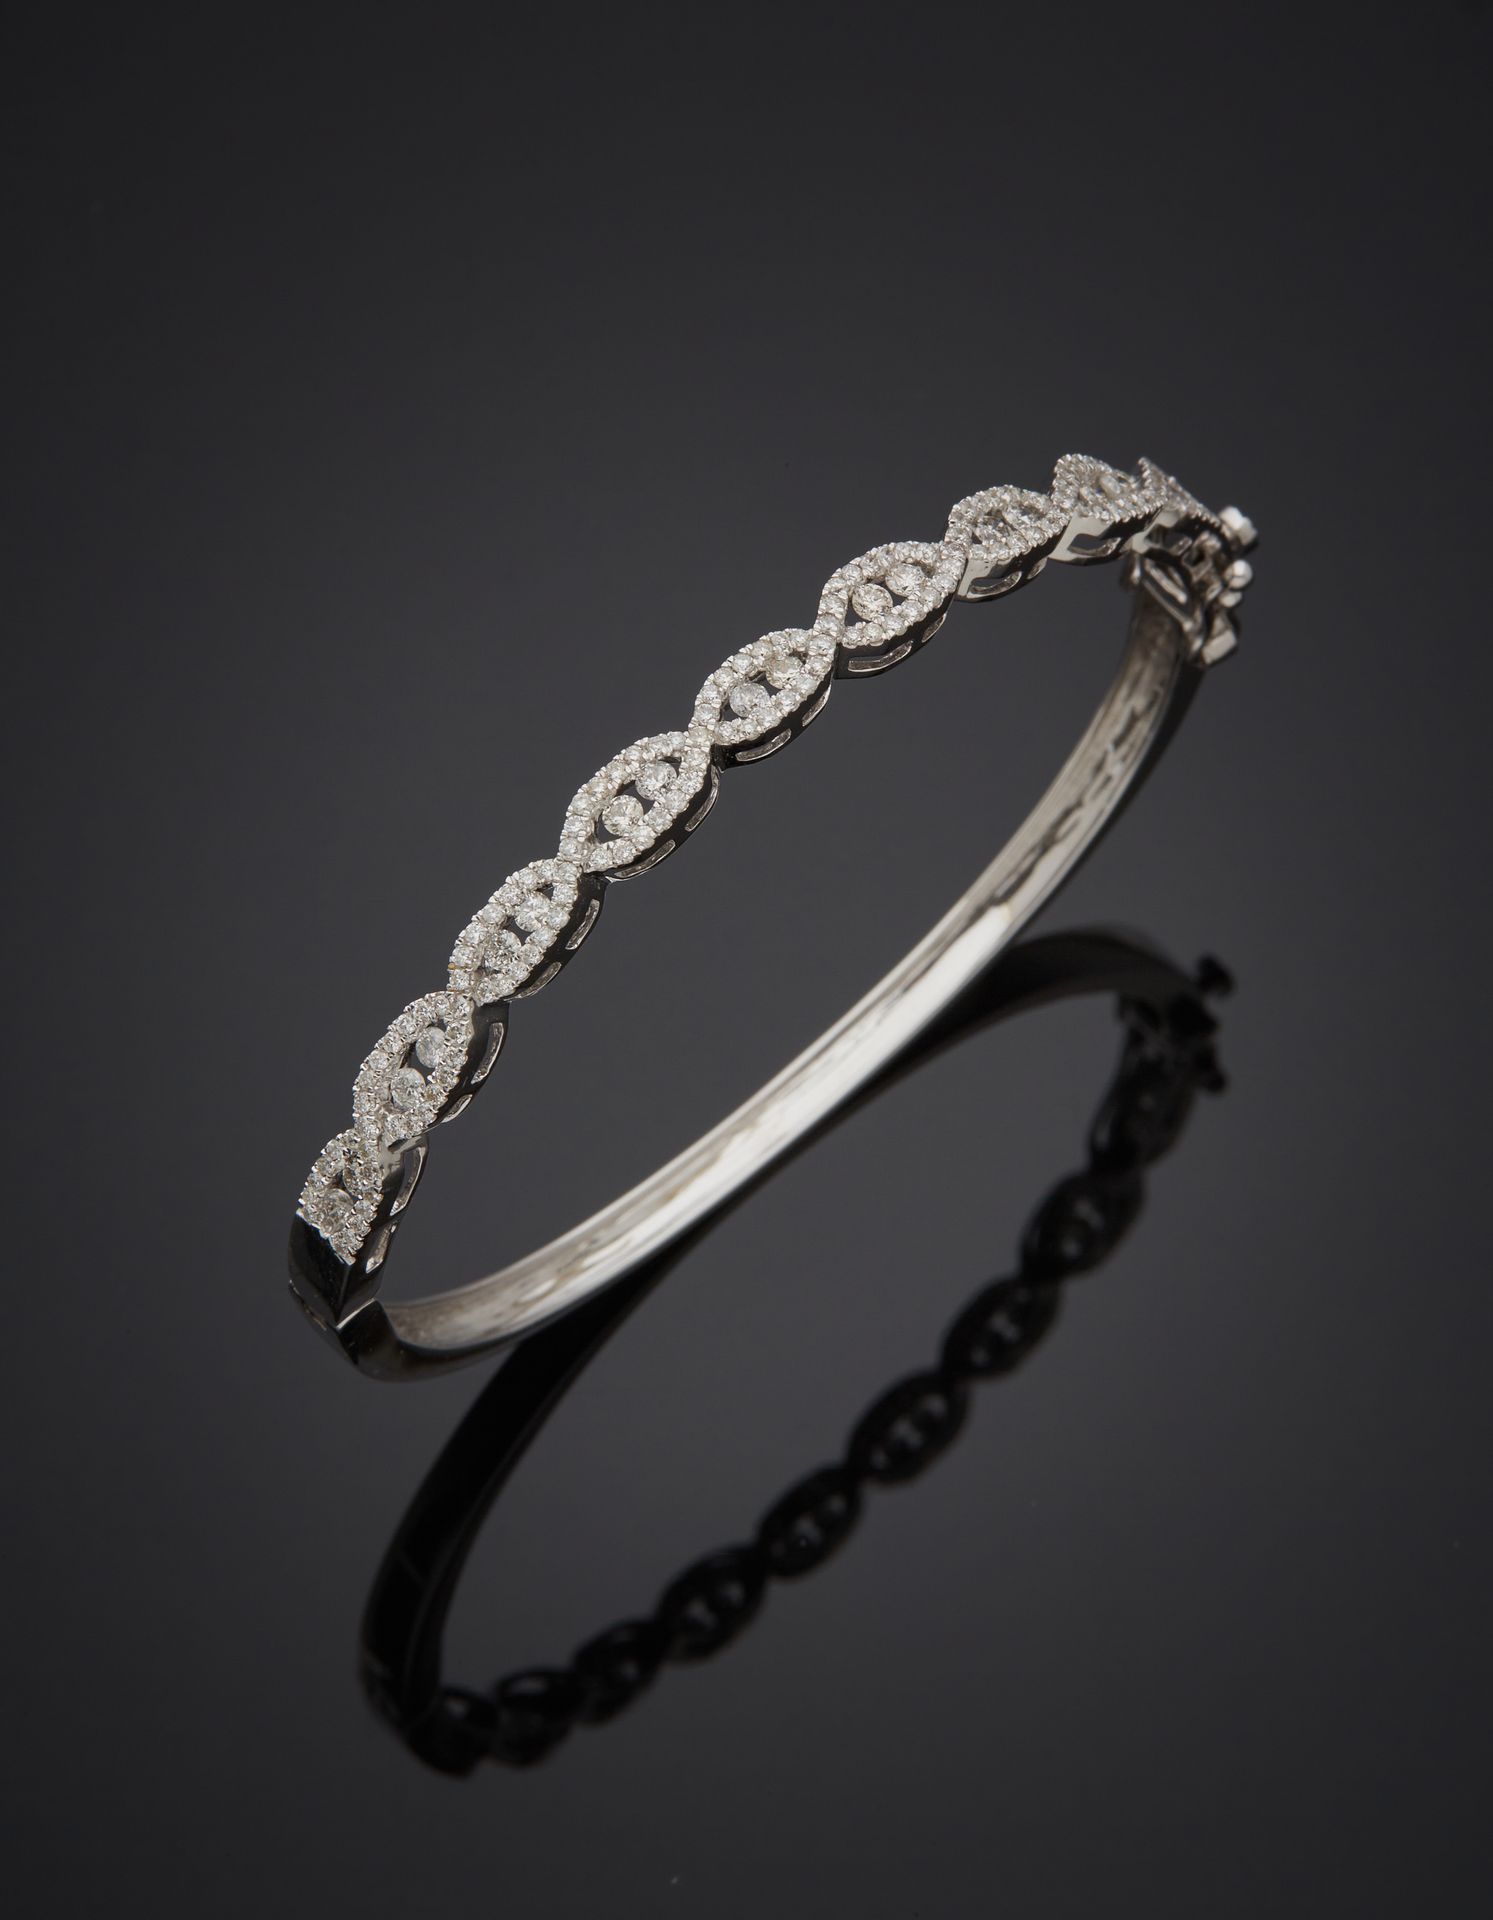 Null 镂空编织设计的白金（750‰）刚性开口手镯，镶嵌明亮型切割钻石。
长 : 17 cm - 宽 : 0,5 cm
毛重 : 13 g